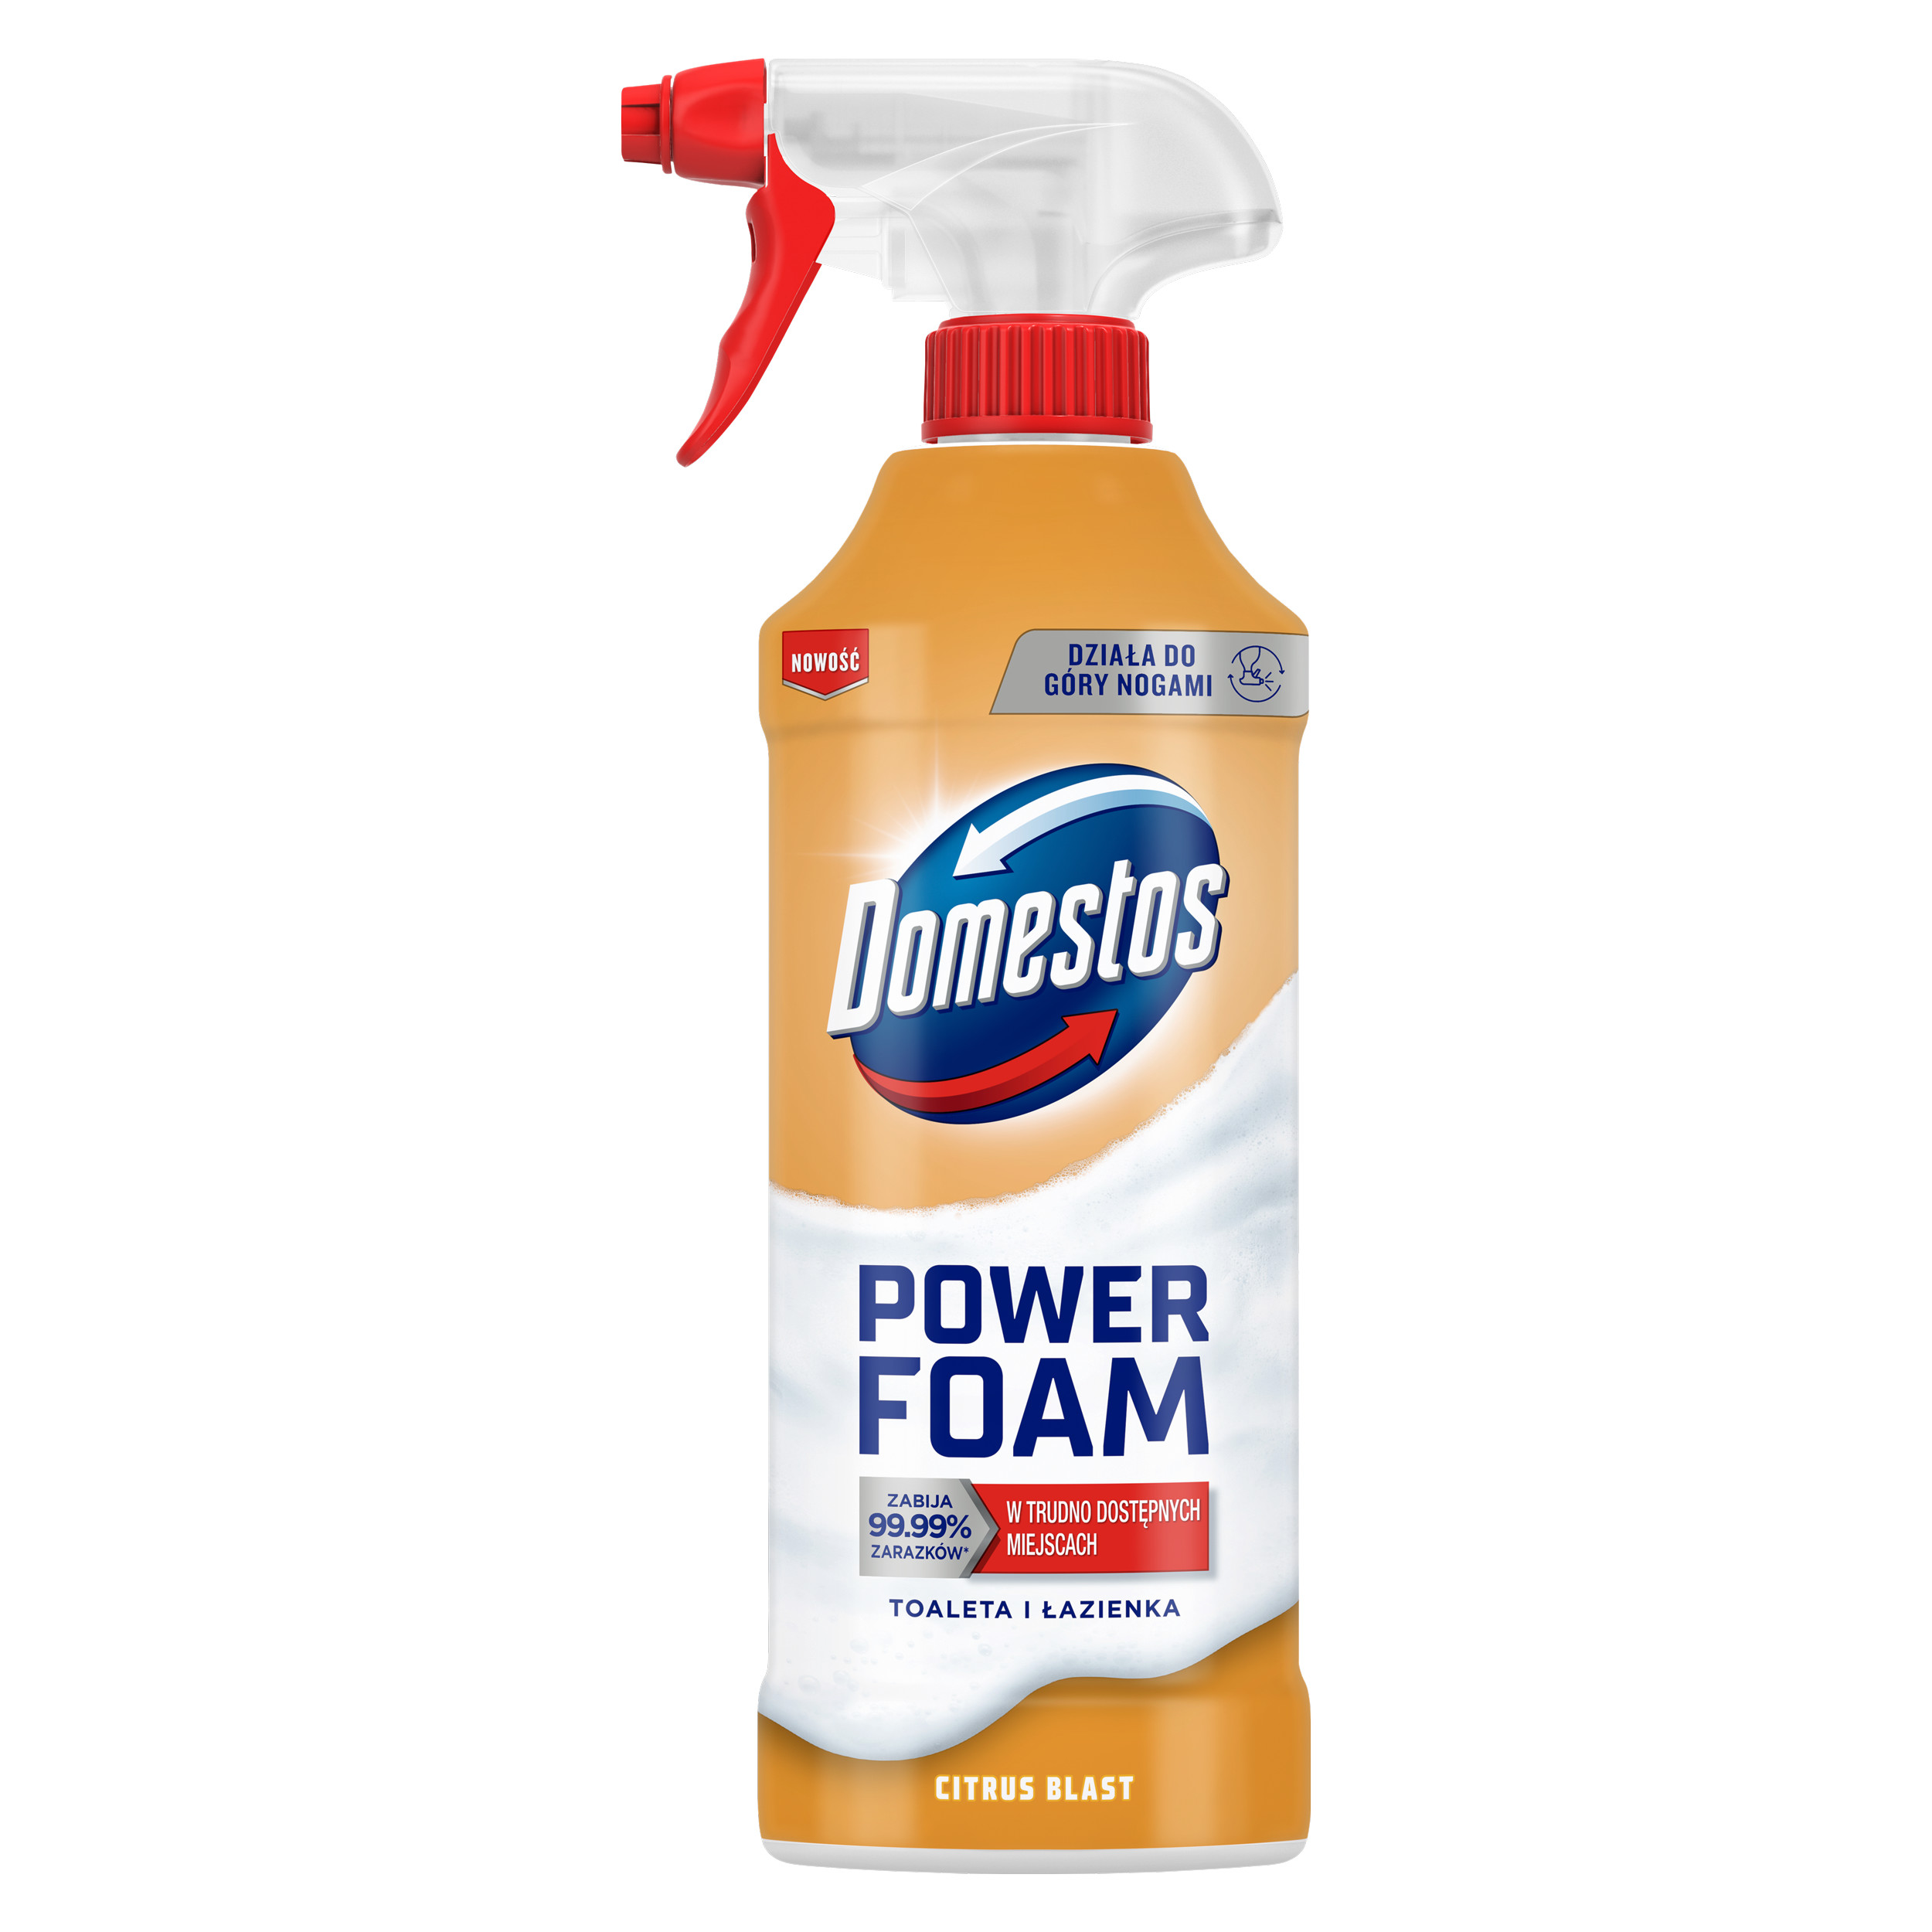 Domestos Power Foam Citrus Blast packshot